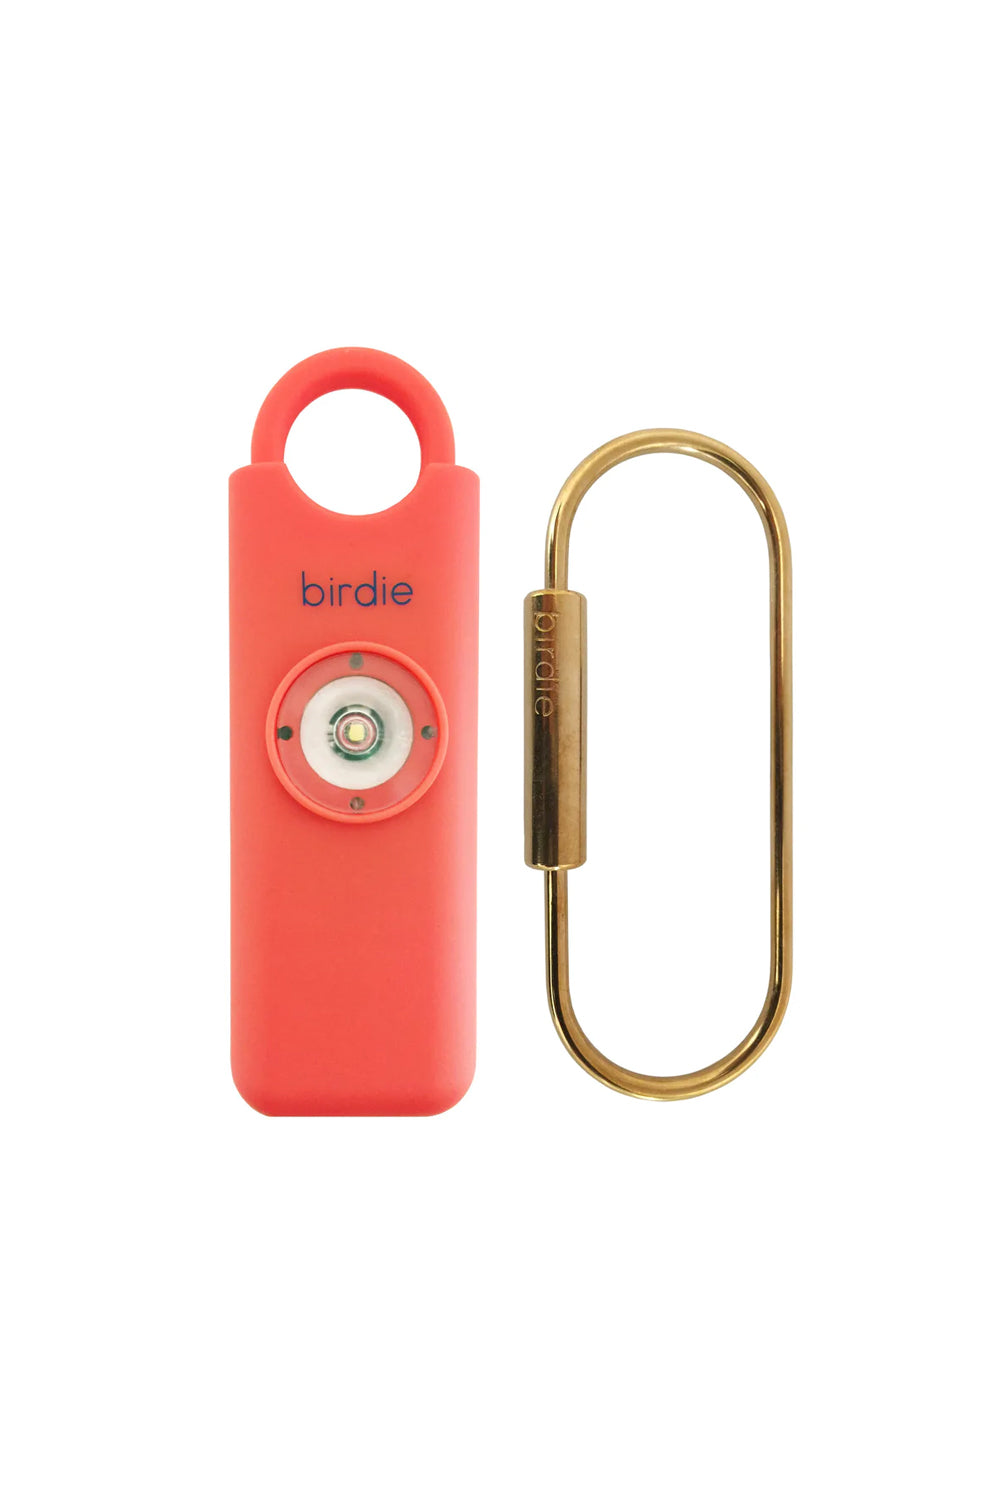 She's Birdie: Alarm Keychain - Coral | Makk Fashions